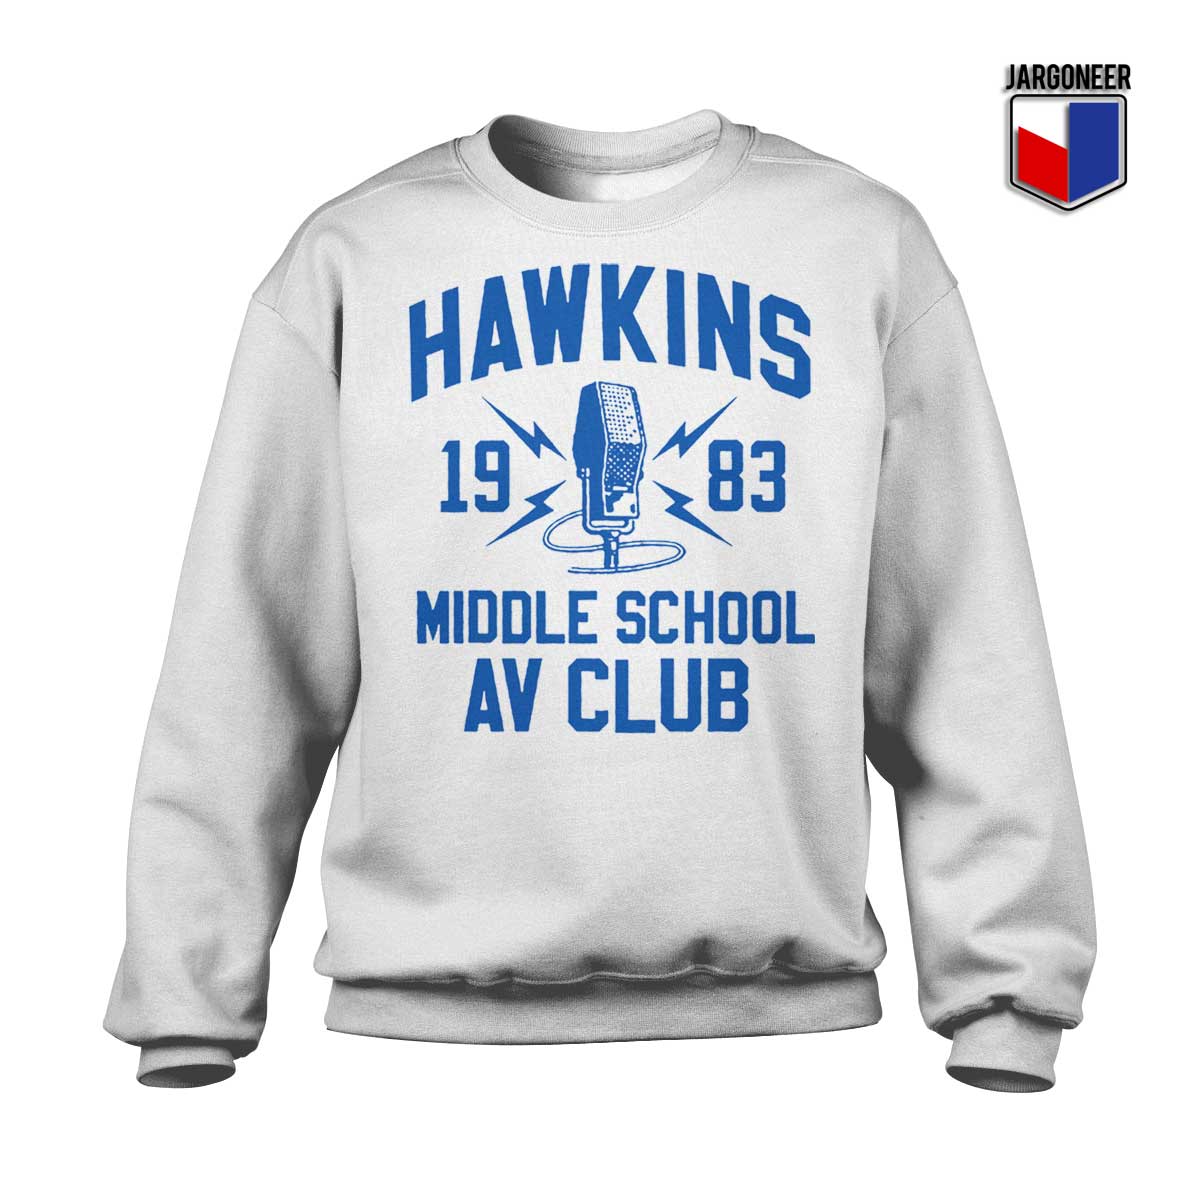 Hawkins Middle School Sweatshirt - Shop Unique Graphic Cool Shirt Designs